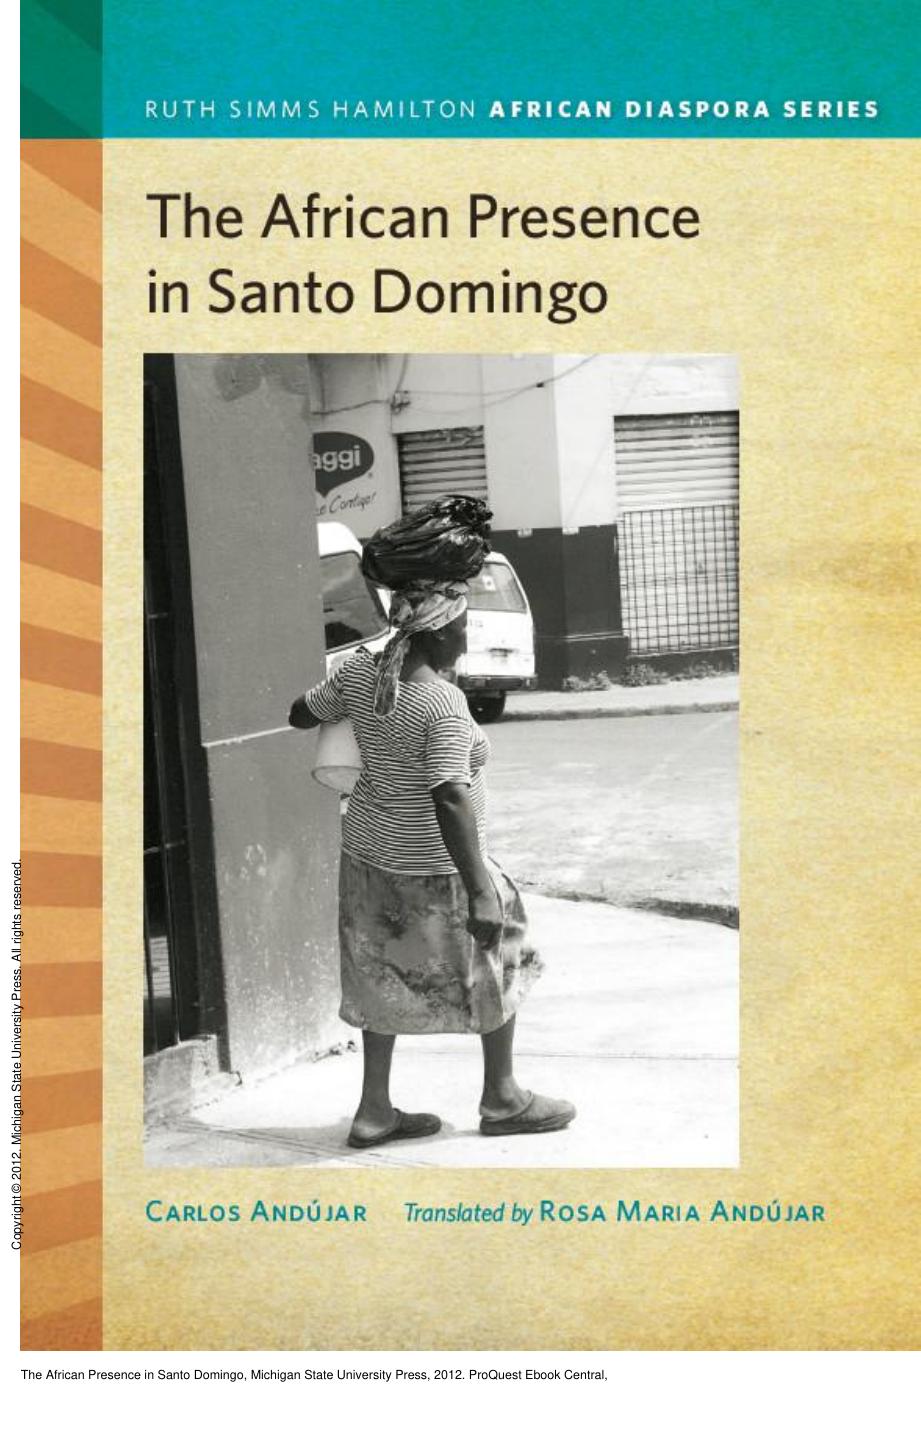 The African Presence in Santo Domingo by Carlos Andujar